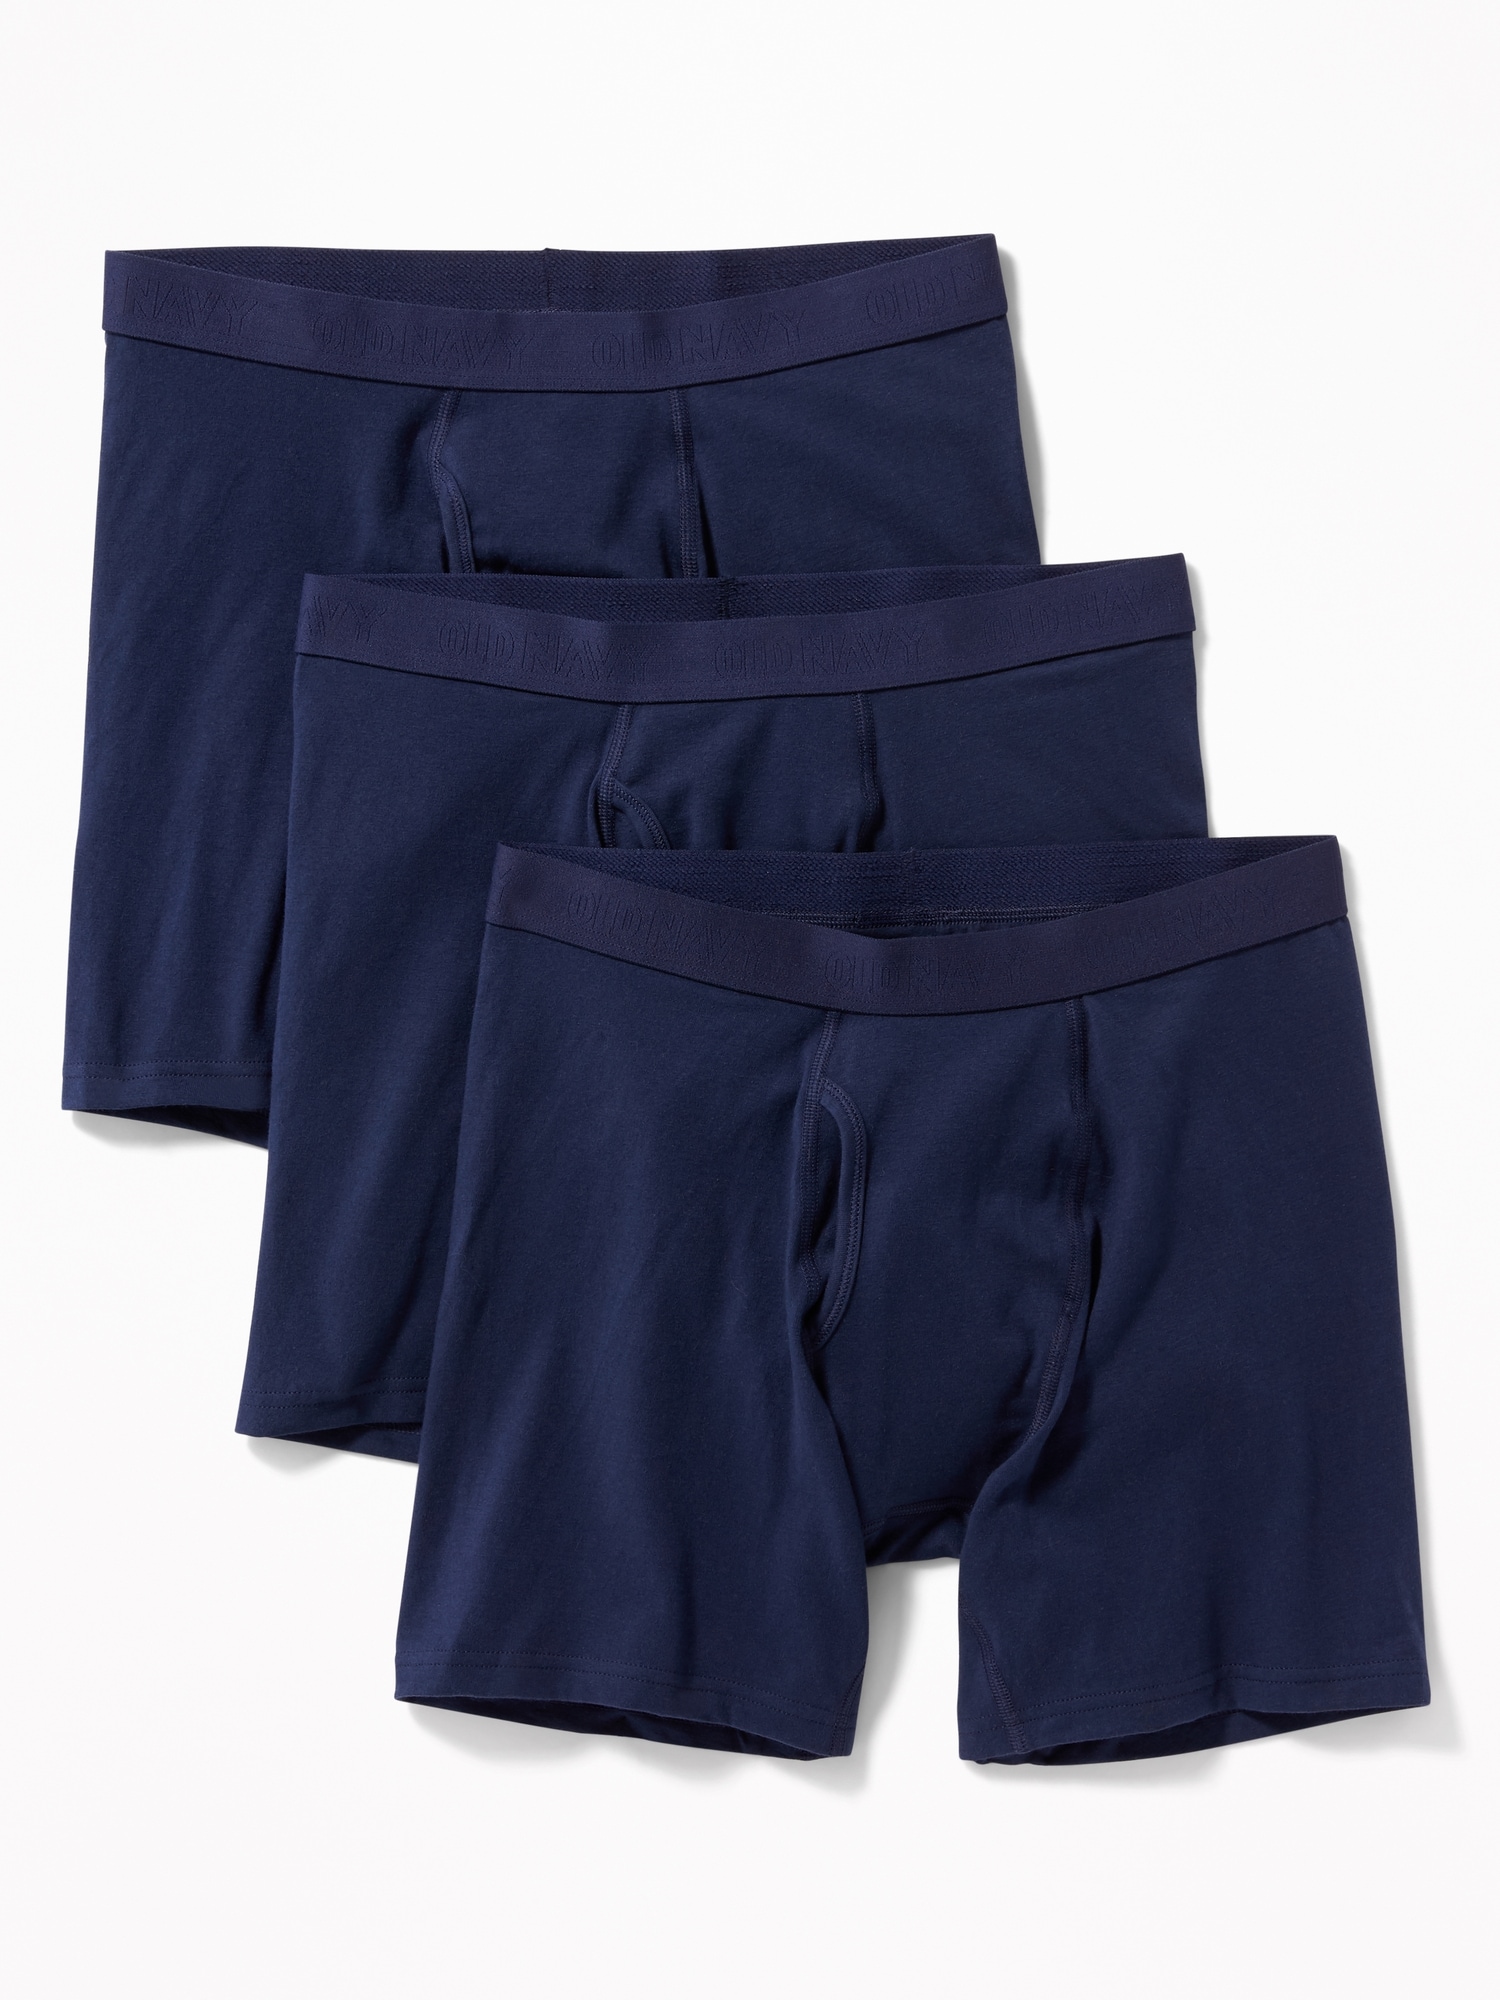 Soft-Washed Boxer Brief Underwear 3-Pack for Men